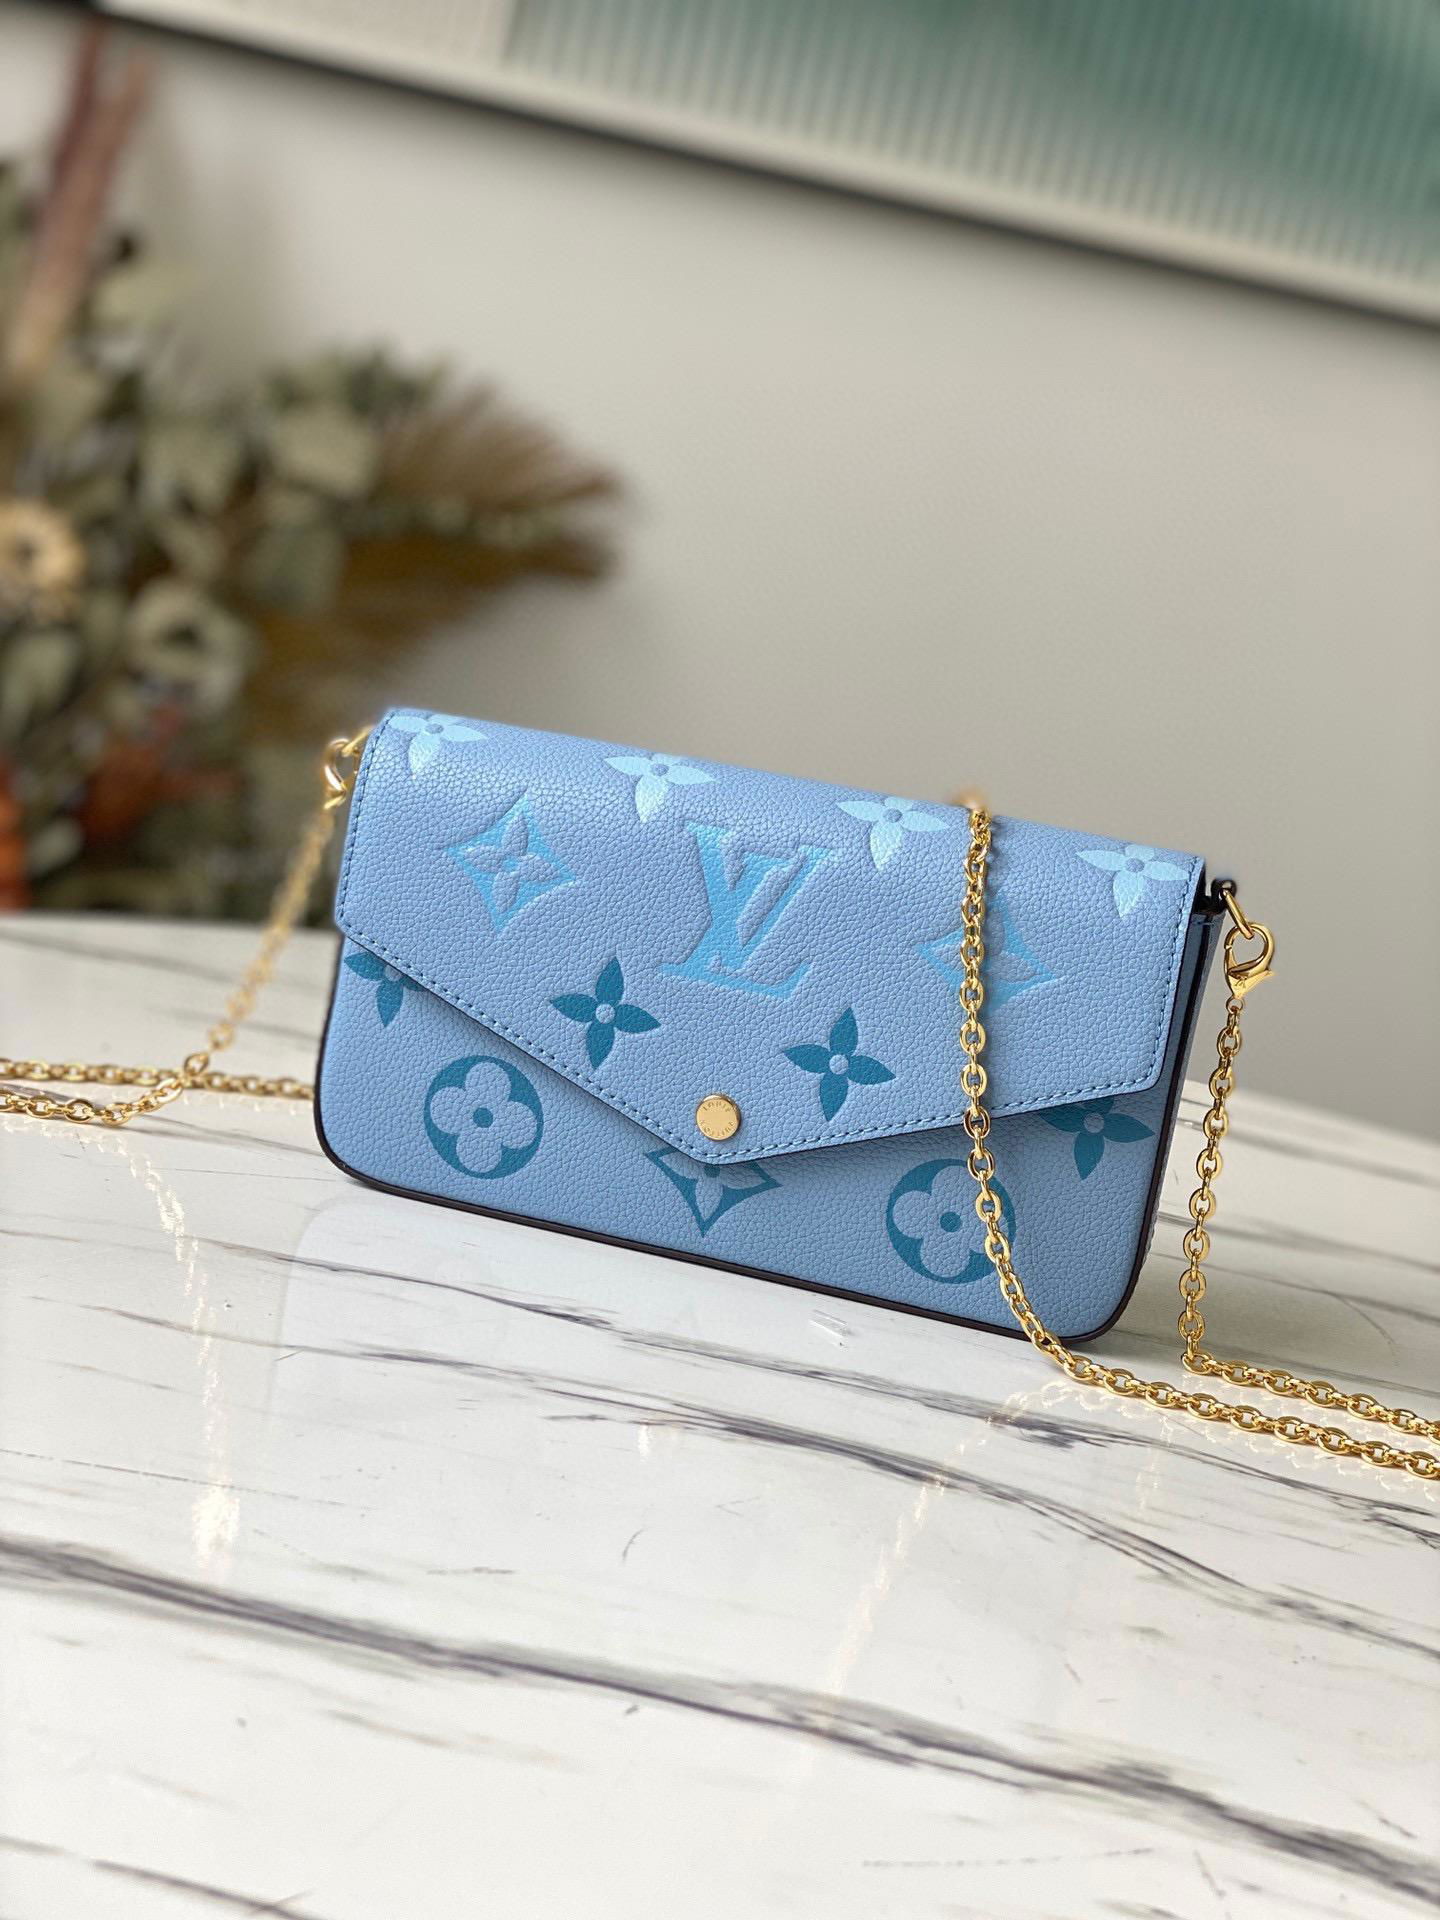               Felicie Pochette Blue Monogram leather Chain envelope bag clutch 